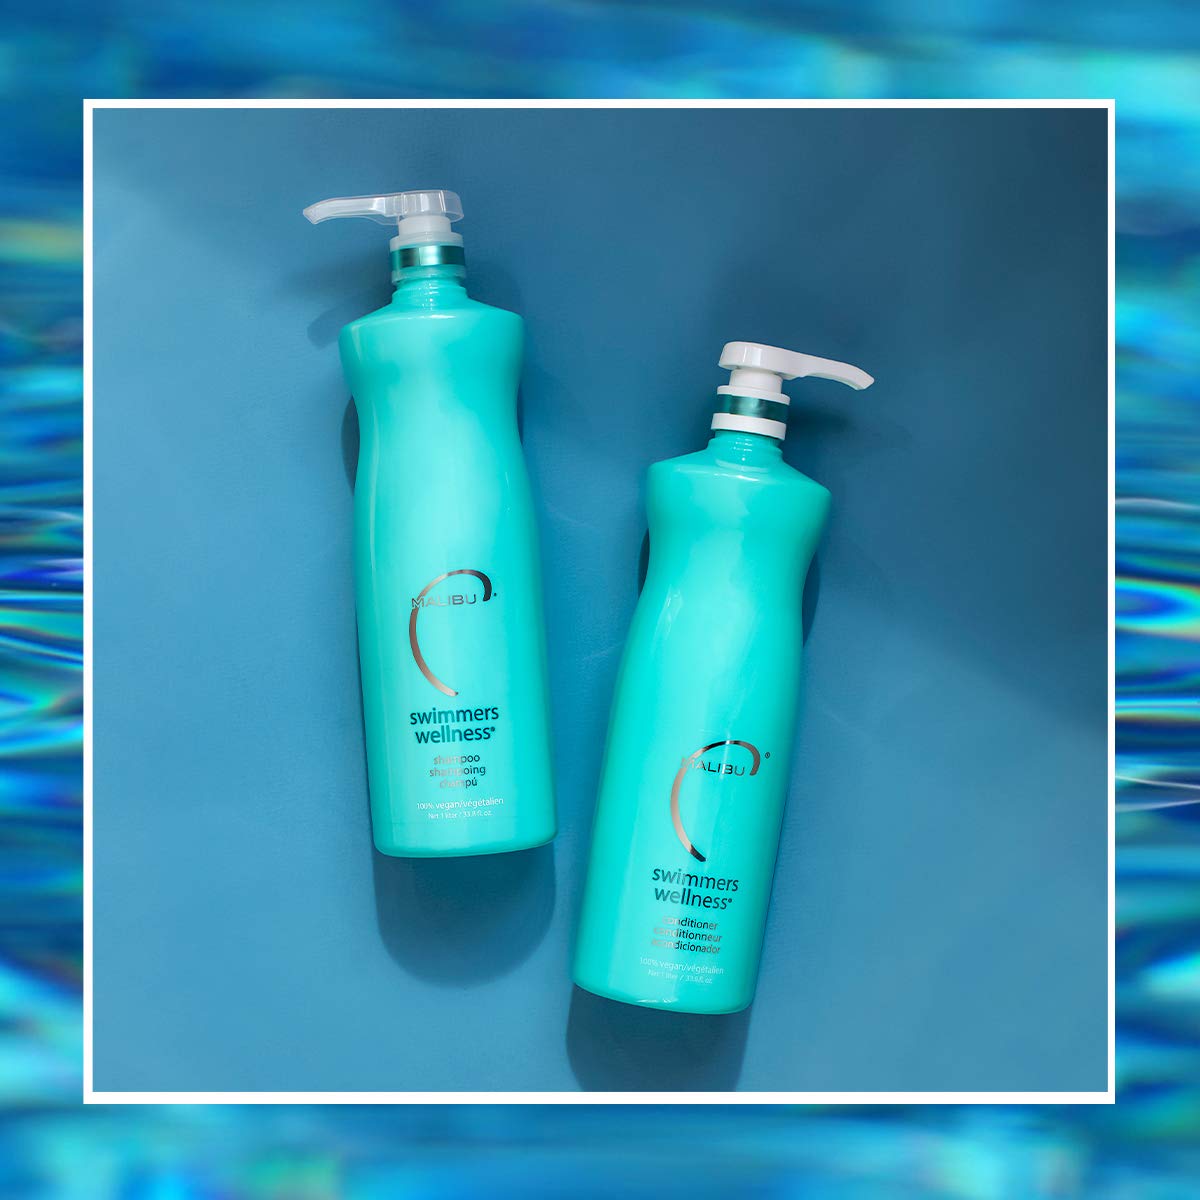 Malibu C Swimmers Wellness Shampoo & Conditioner Liter Duo Set